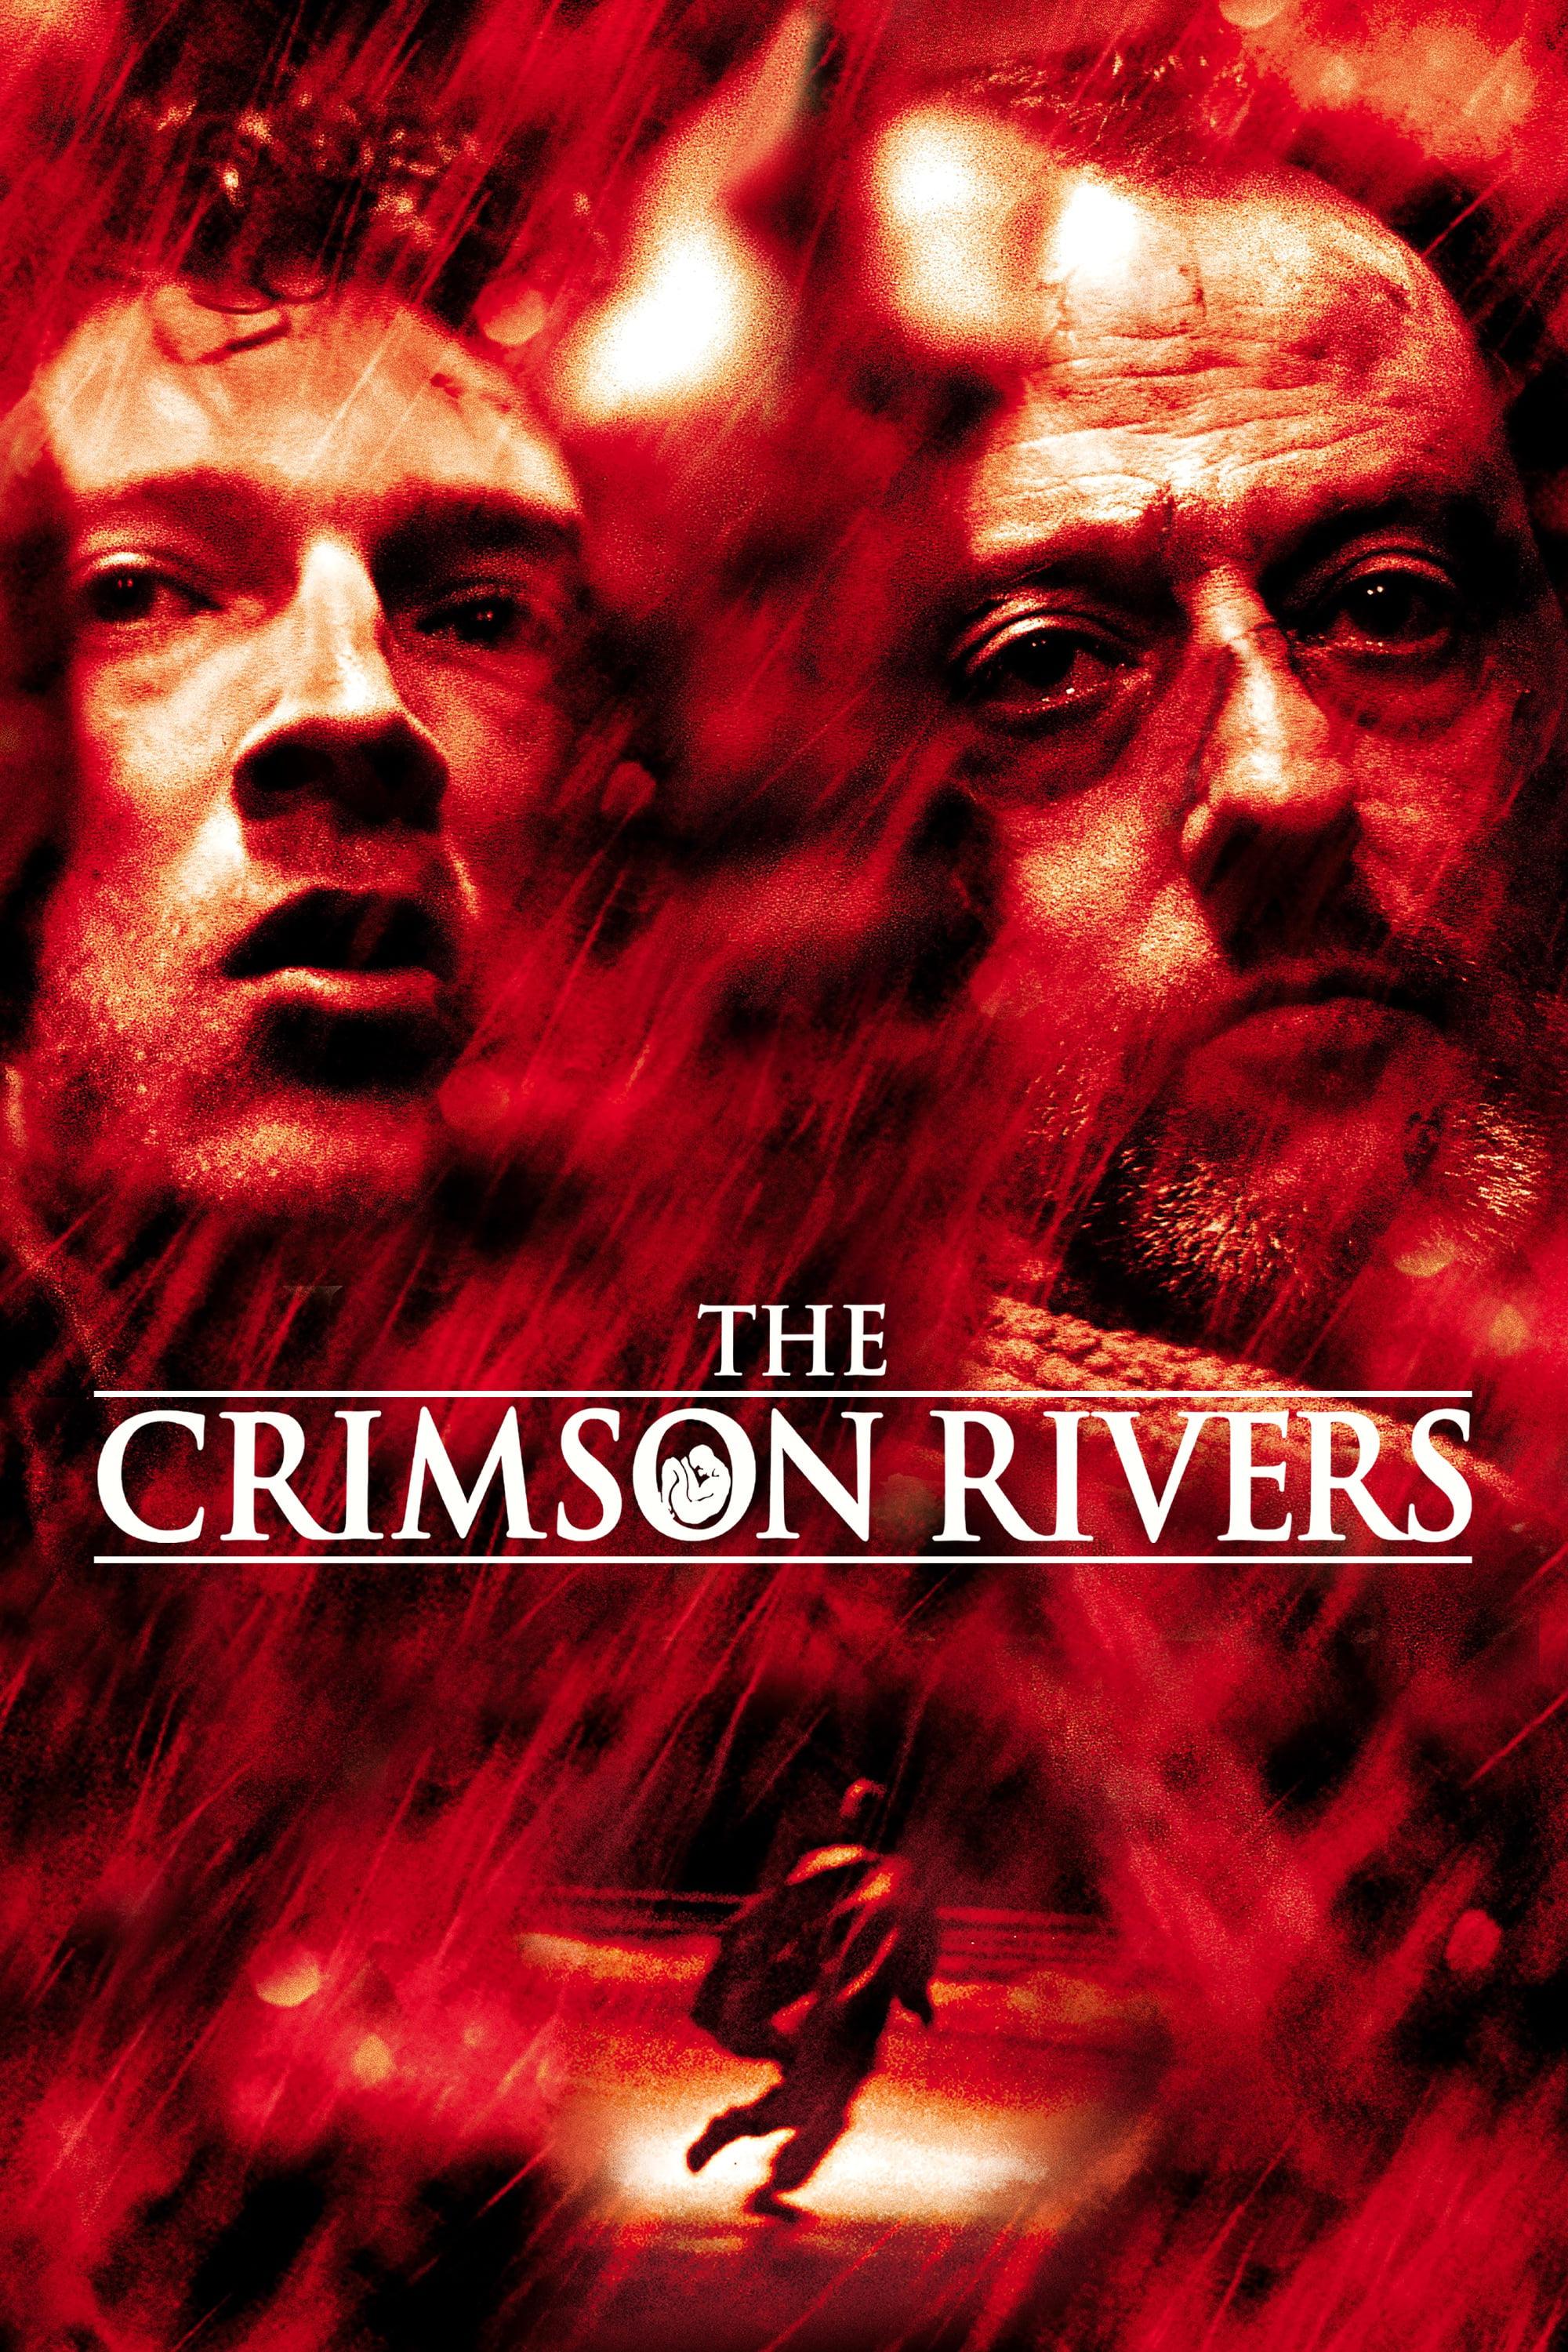 The Crimson Rivers poster